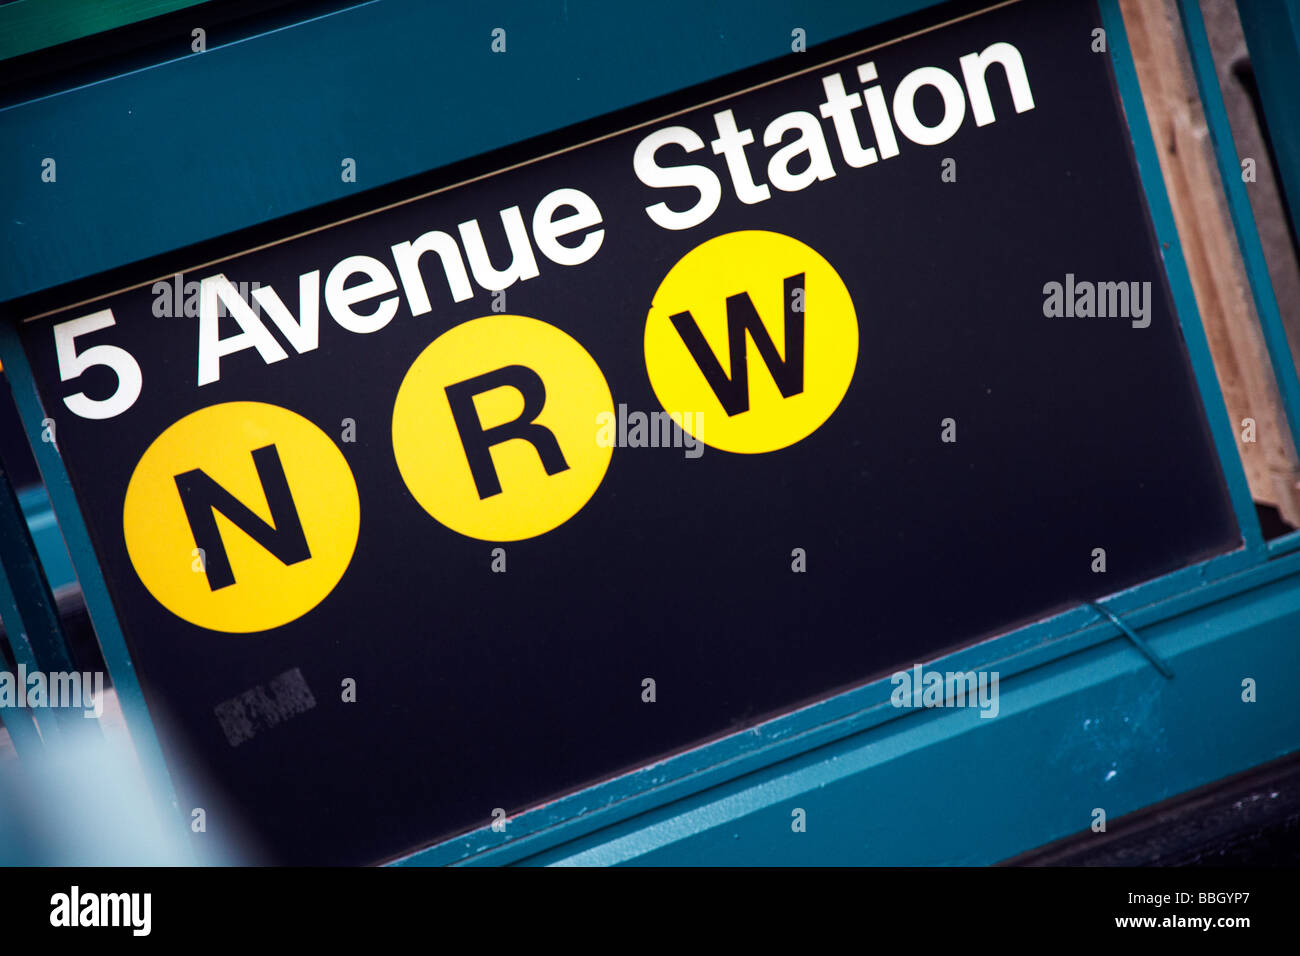 5th Avenue Station, New York subway Stock Photo